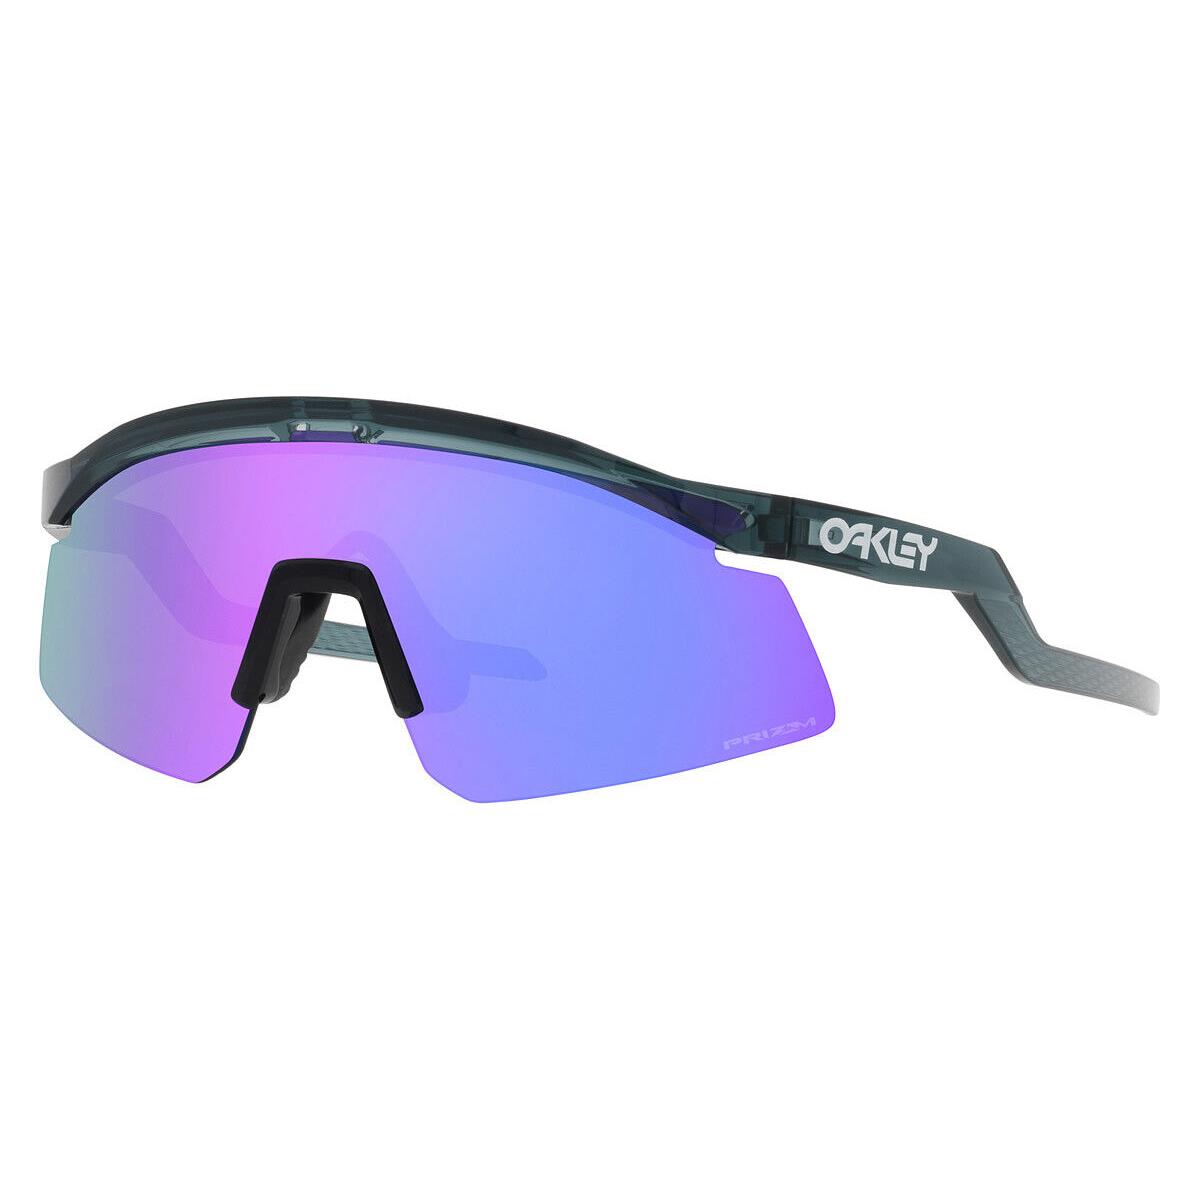 Oakley Hydra OO9229 Sunglasses Men Crystal Black / Prizm Violet - Frame: Crystal Black / Prizm Violet, Lens: Prizm Violet